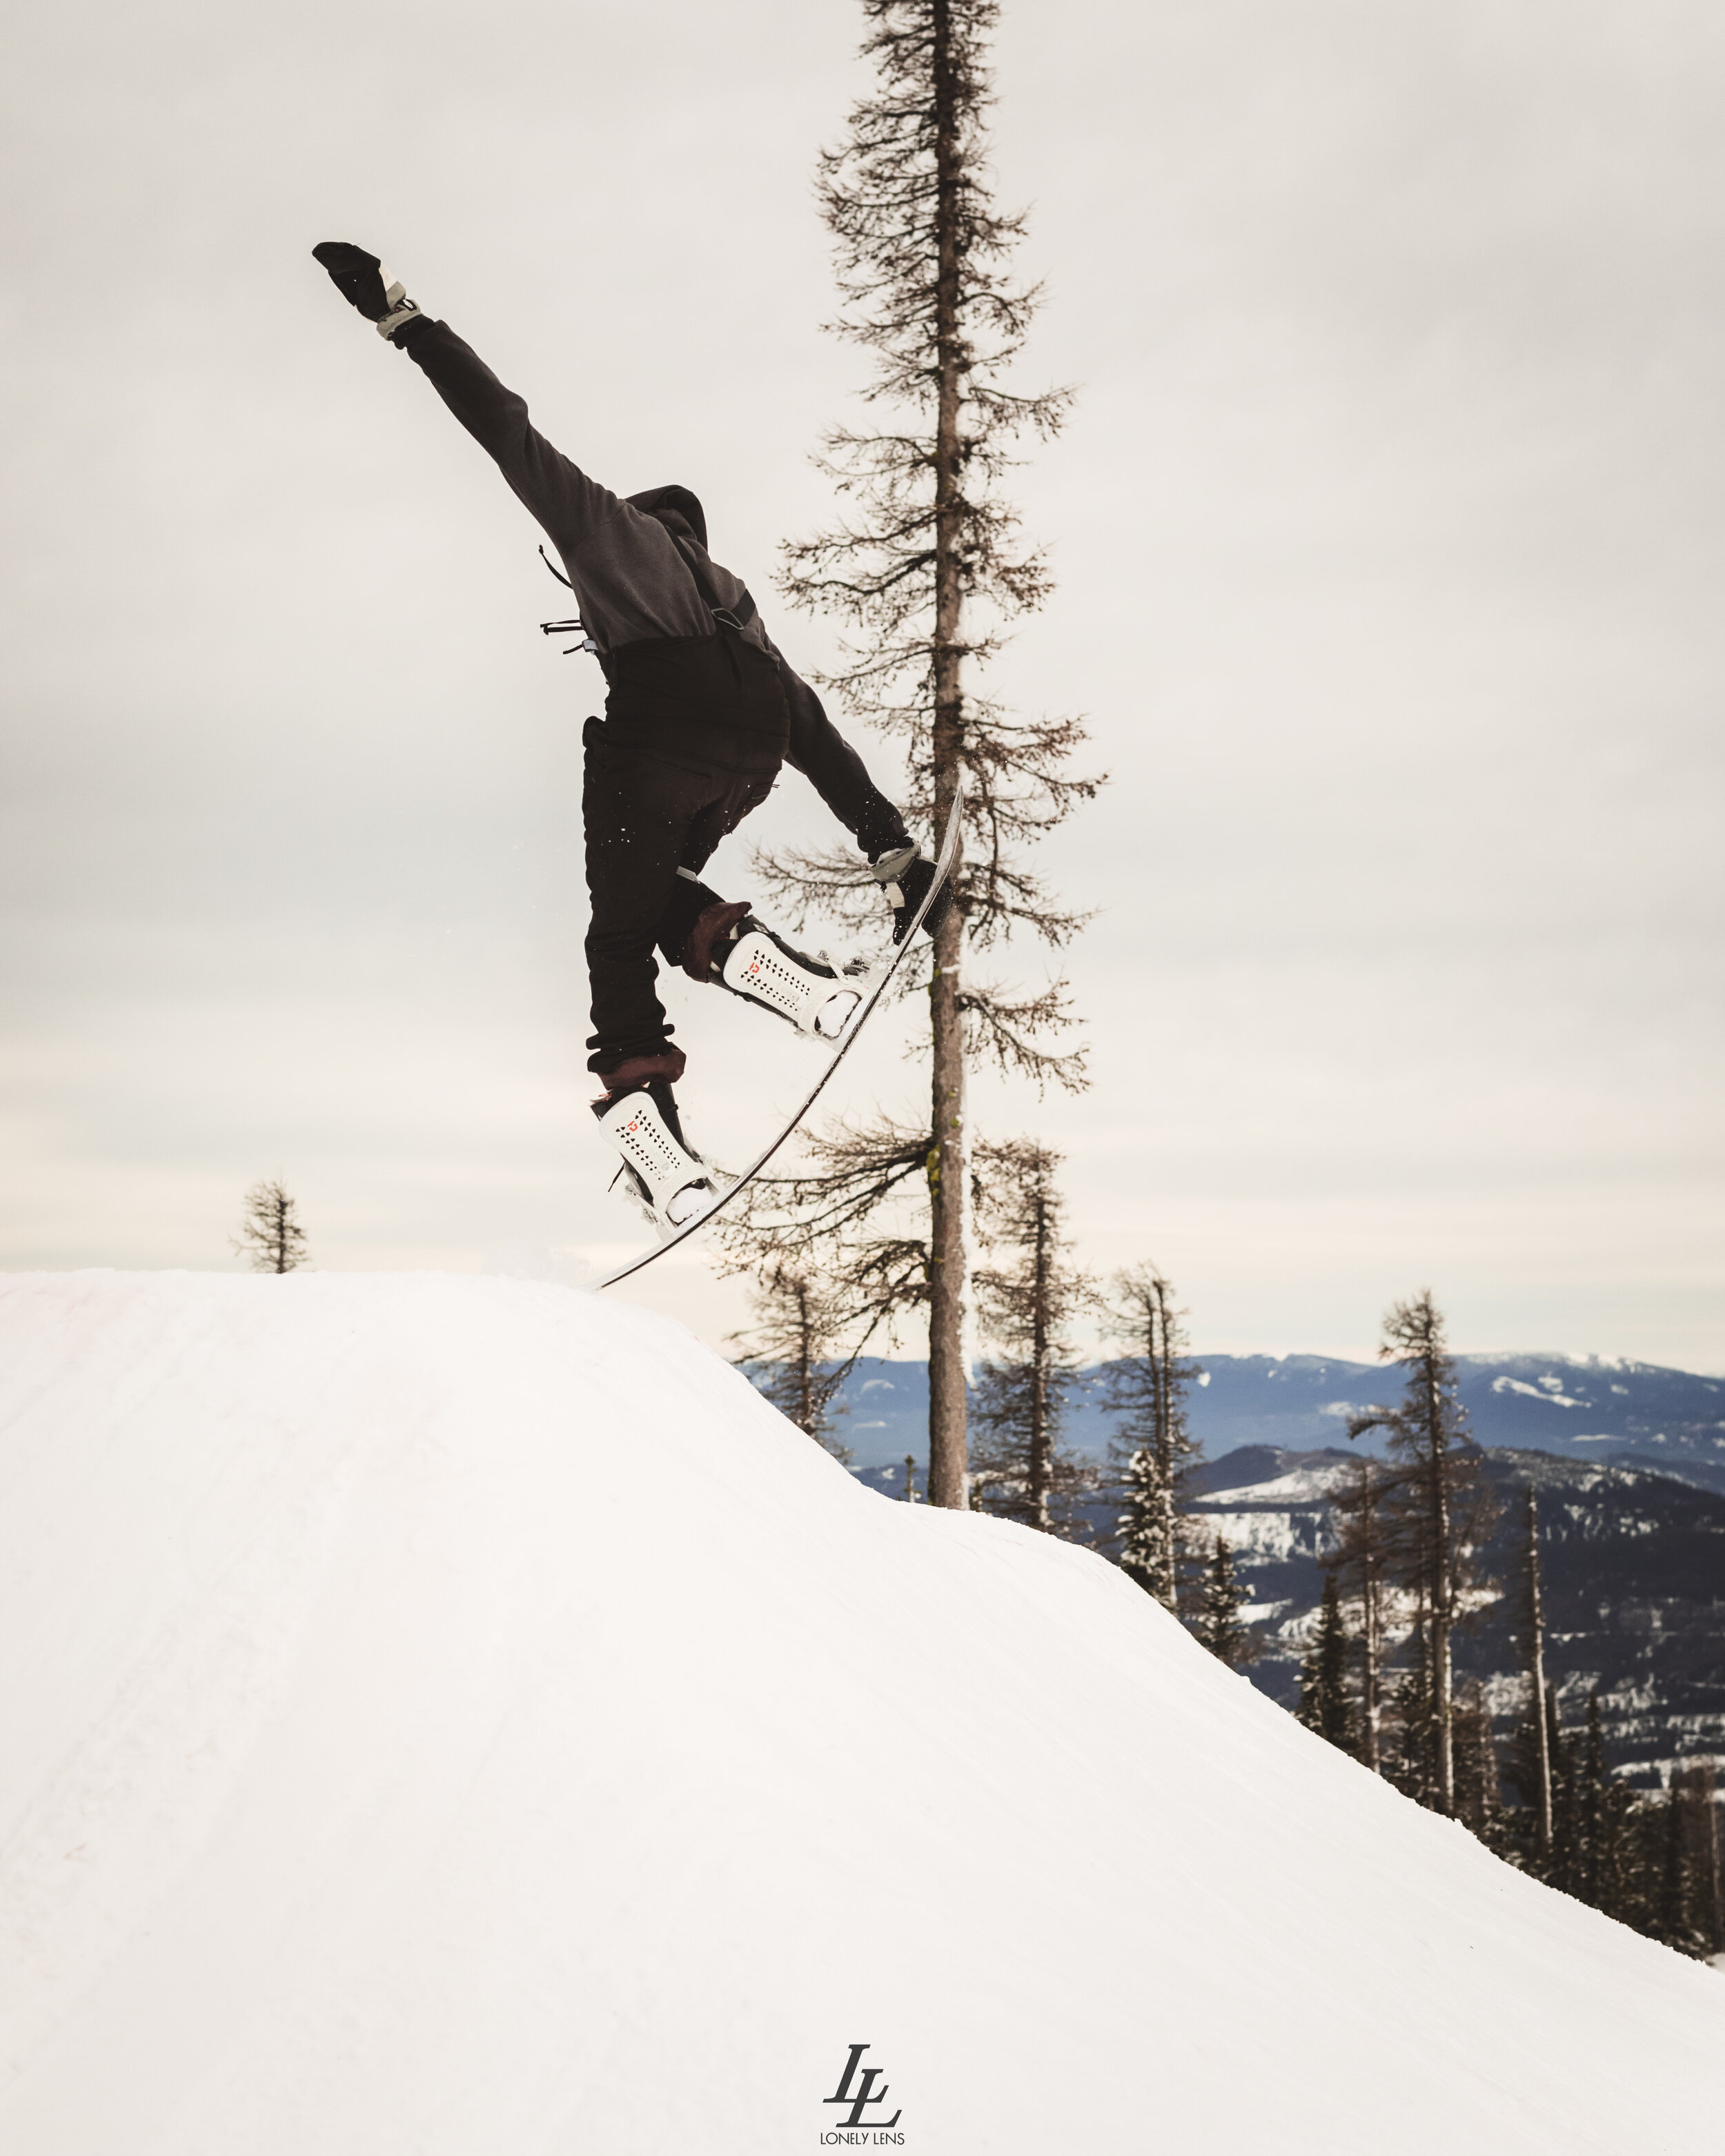 snowboarding-mt-spokane-jam4cans.jpg